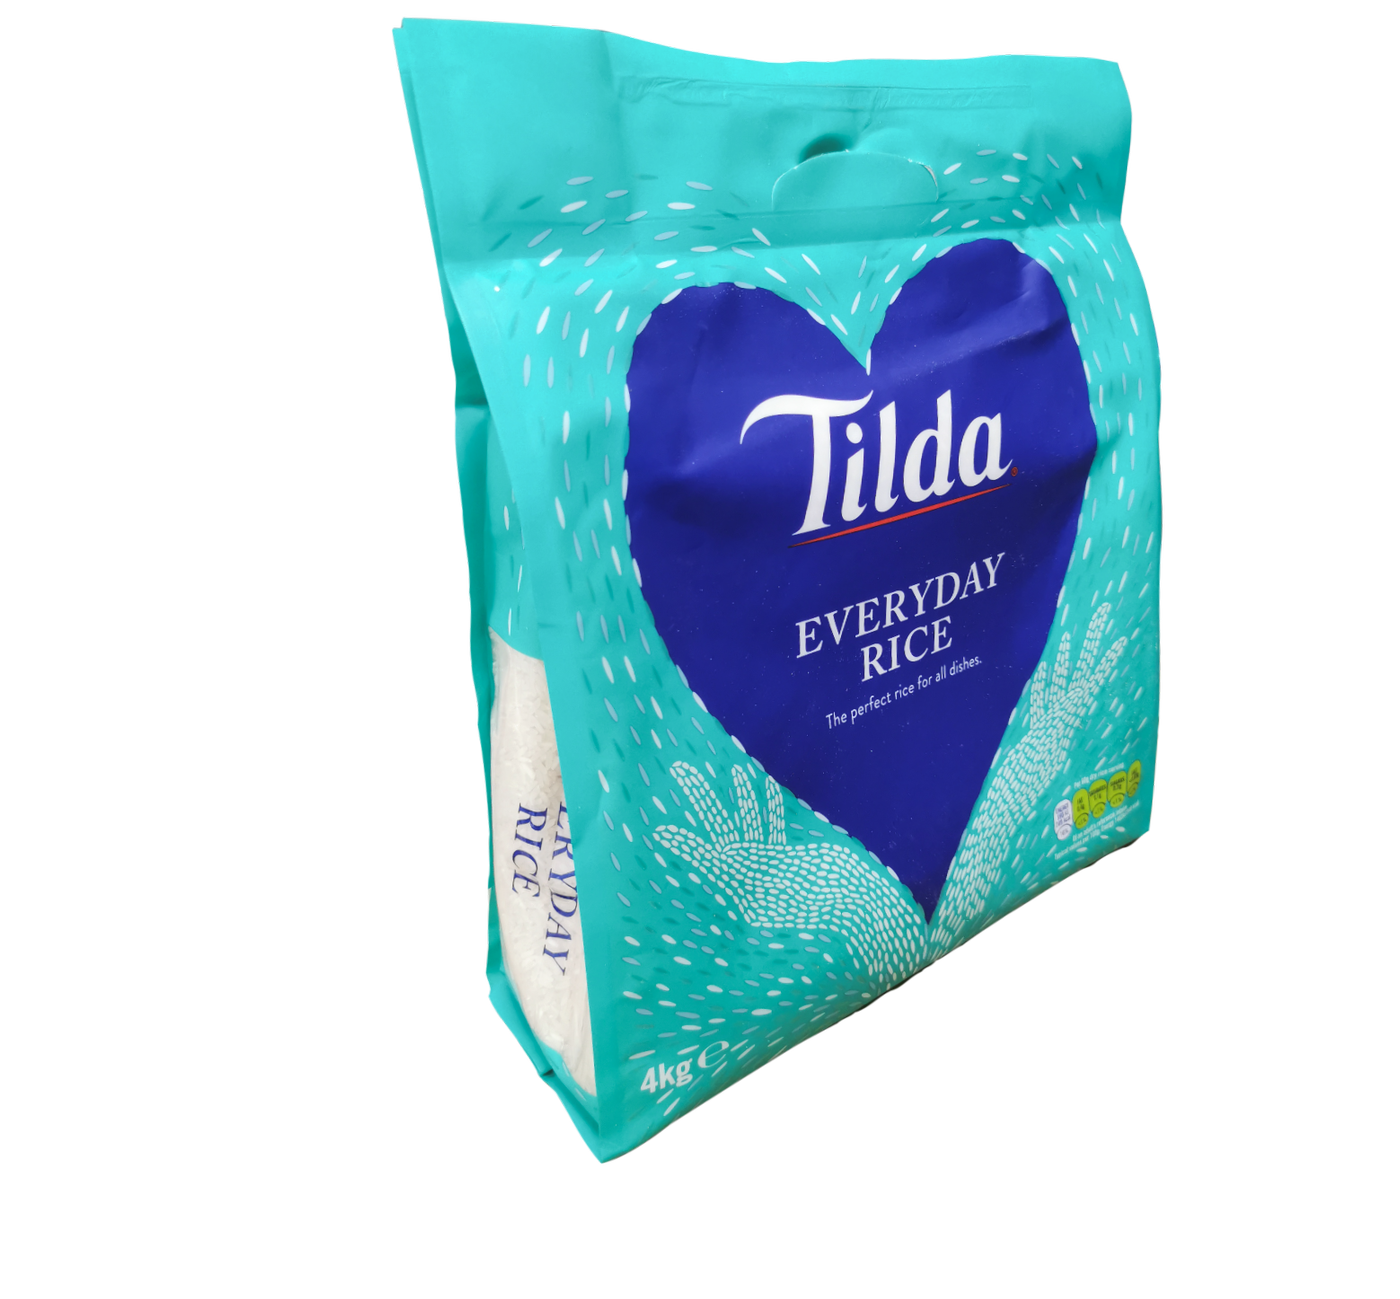 Tilda Everyday Rice